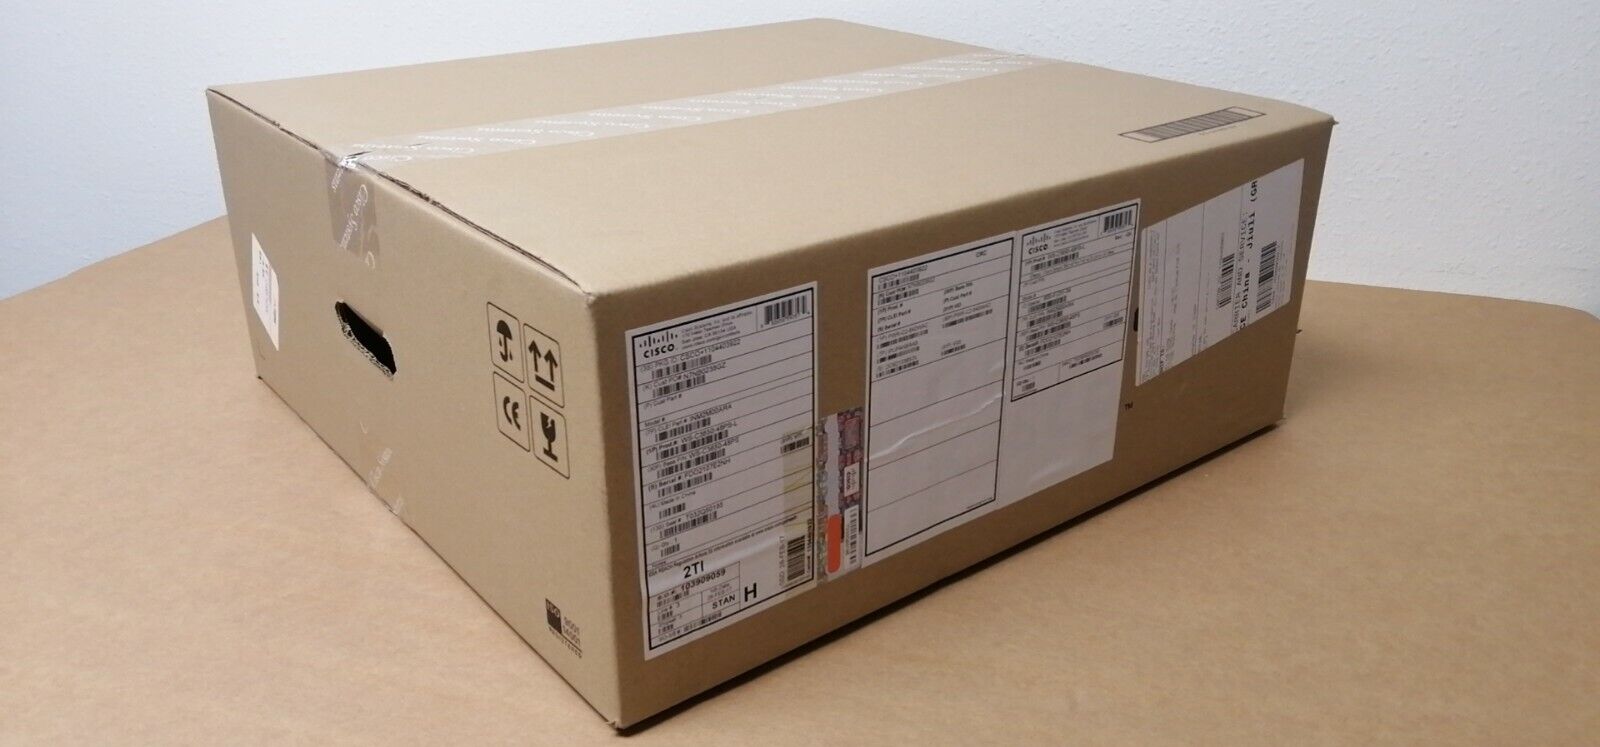 New in Sealed box Cisco ASA5585-S10-K9 100% New Original CISCO